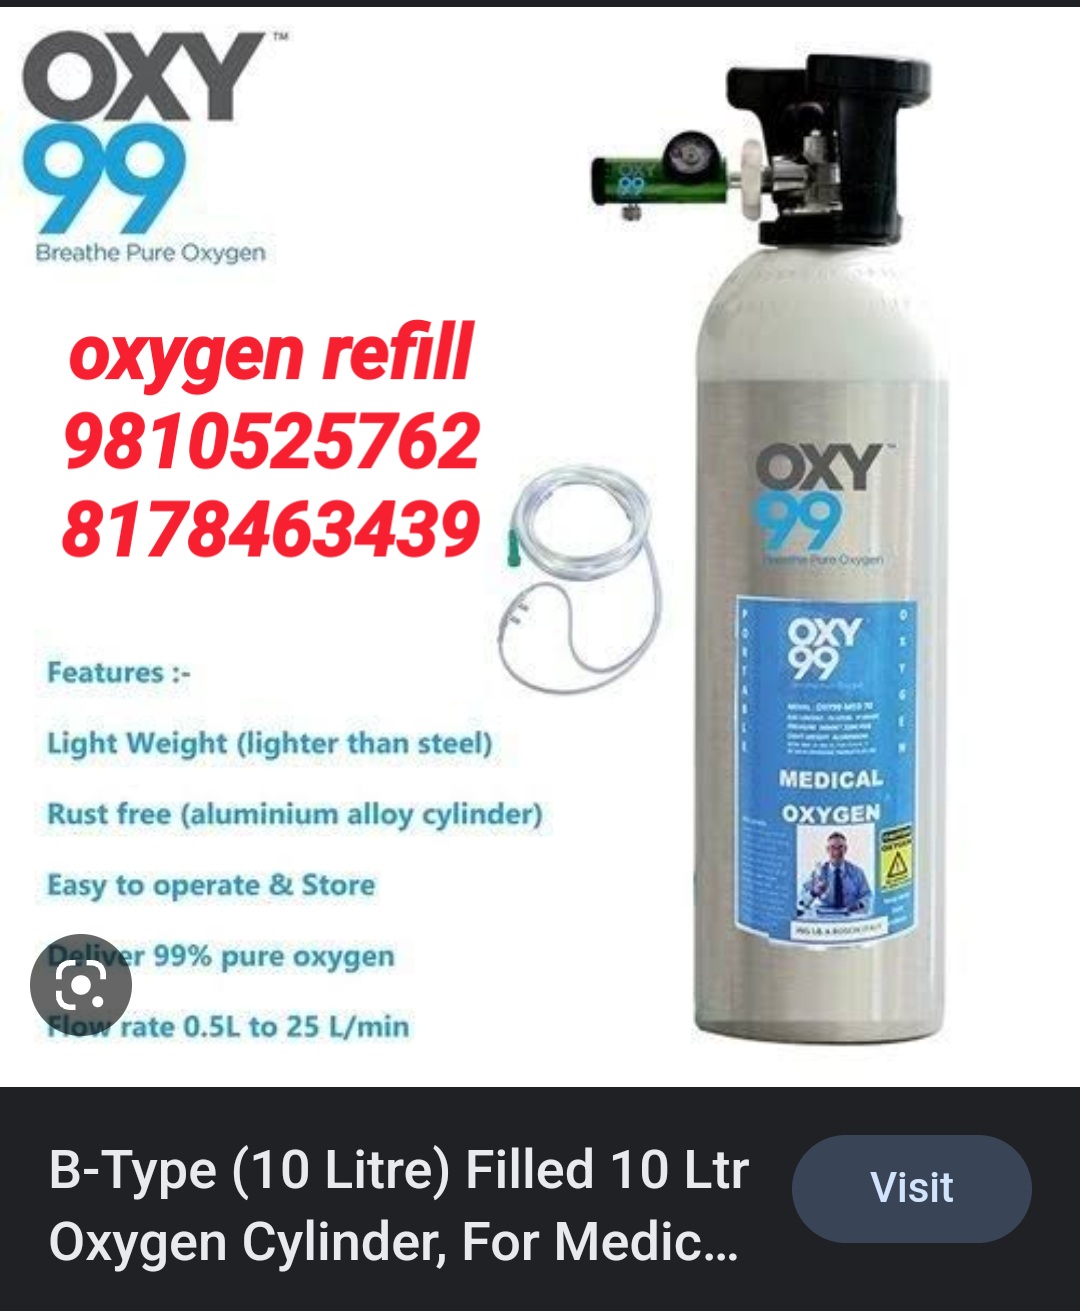 OXYGEN CYLINDER FOR RENT 24*7 IN SOUTH DELHI 8178463439